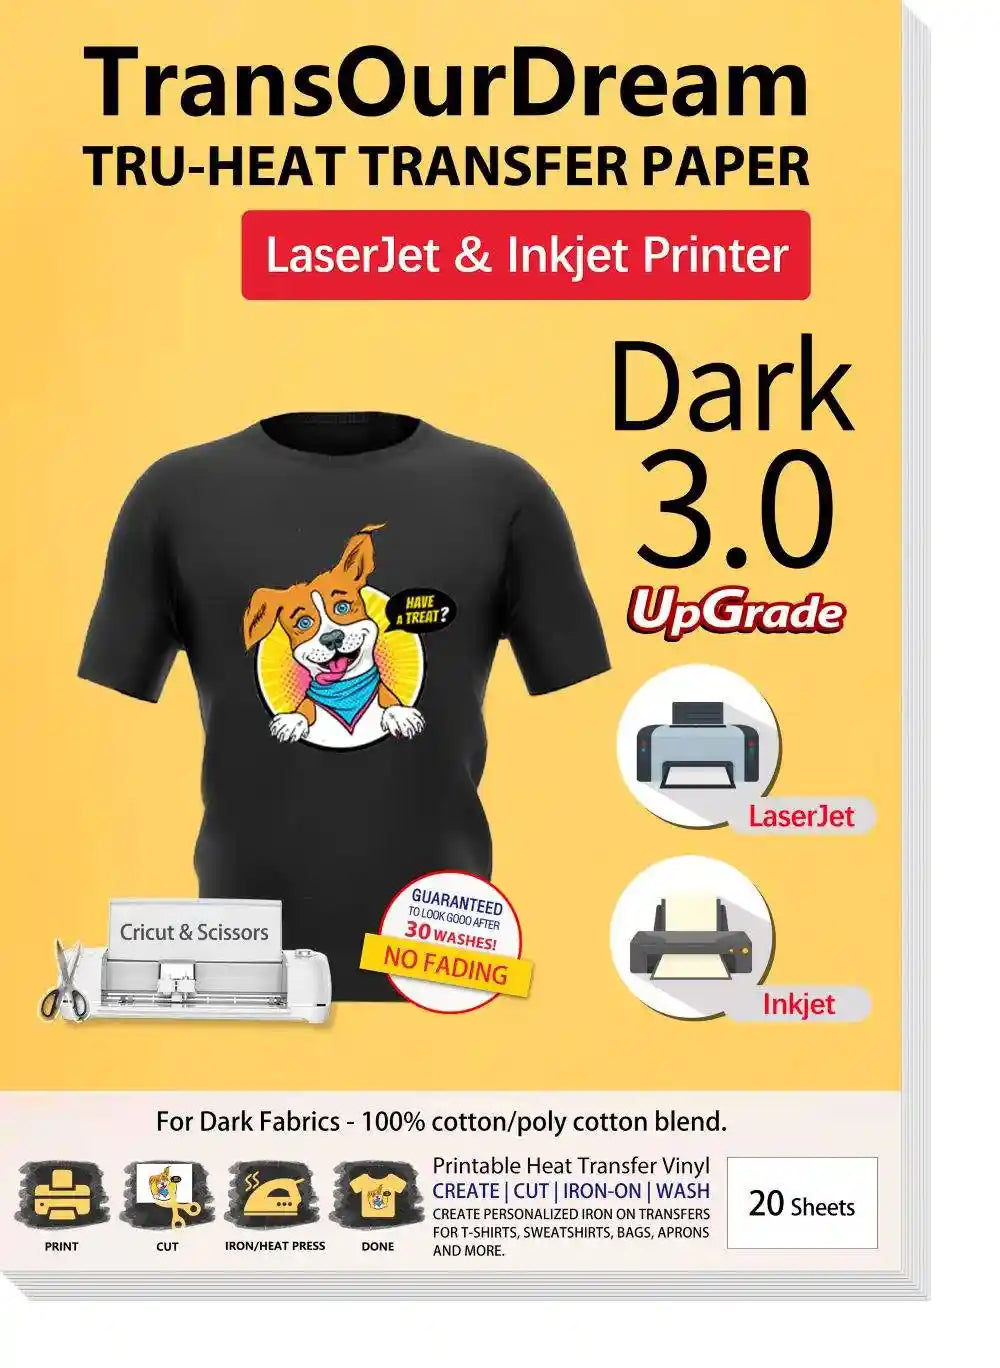 Dark 3.0 | Iron on Heat Transfer Paper for Dark T-Shirts & Fabrics | High-Quality Printable Heat Transfer Paper for Inkjet & LaserJet Printers